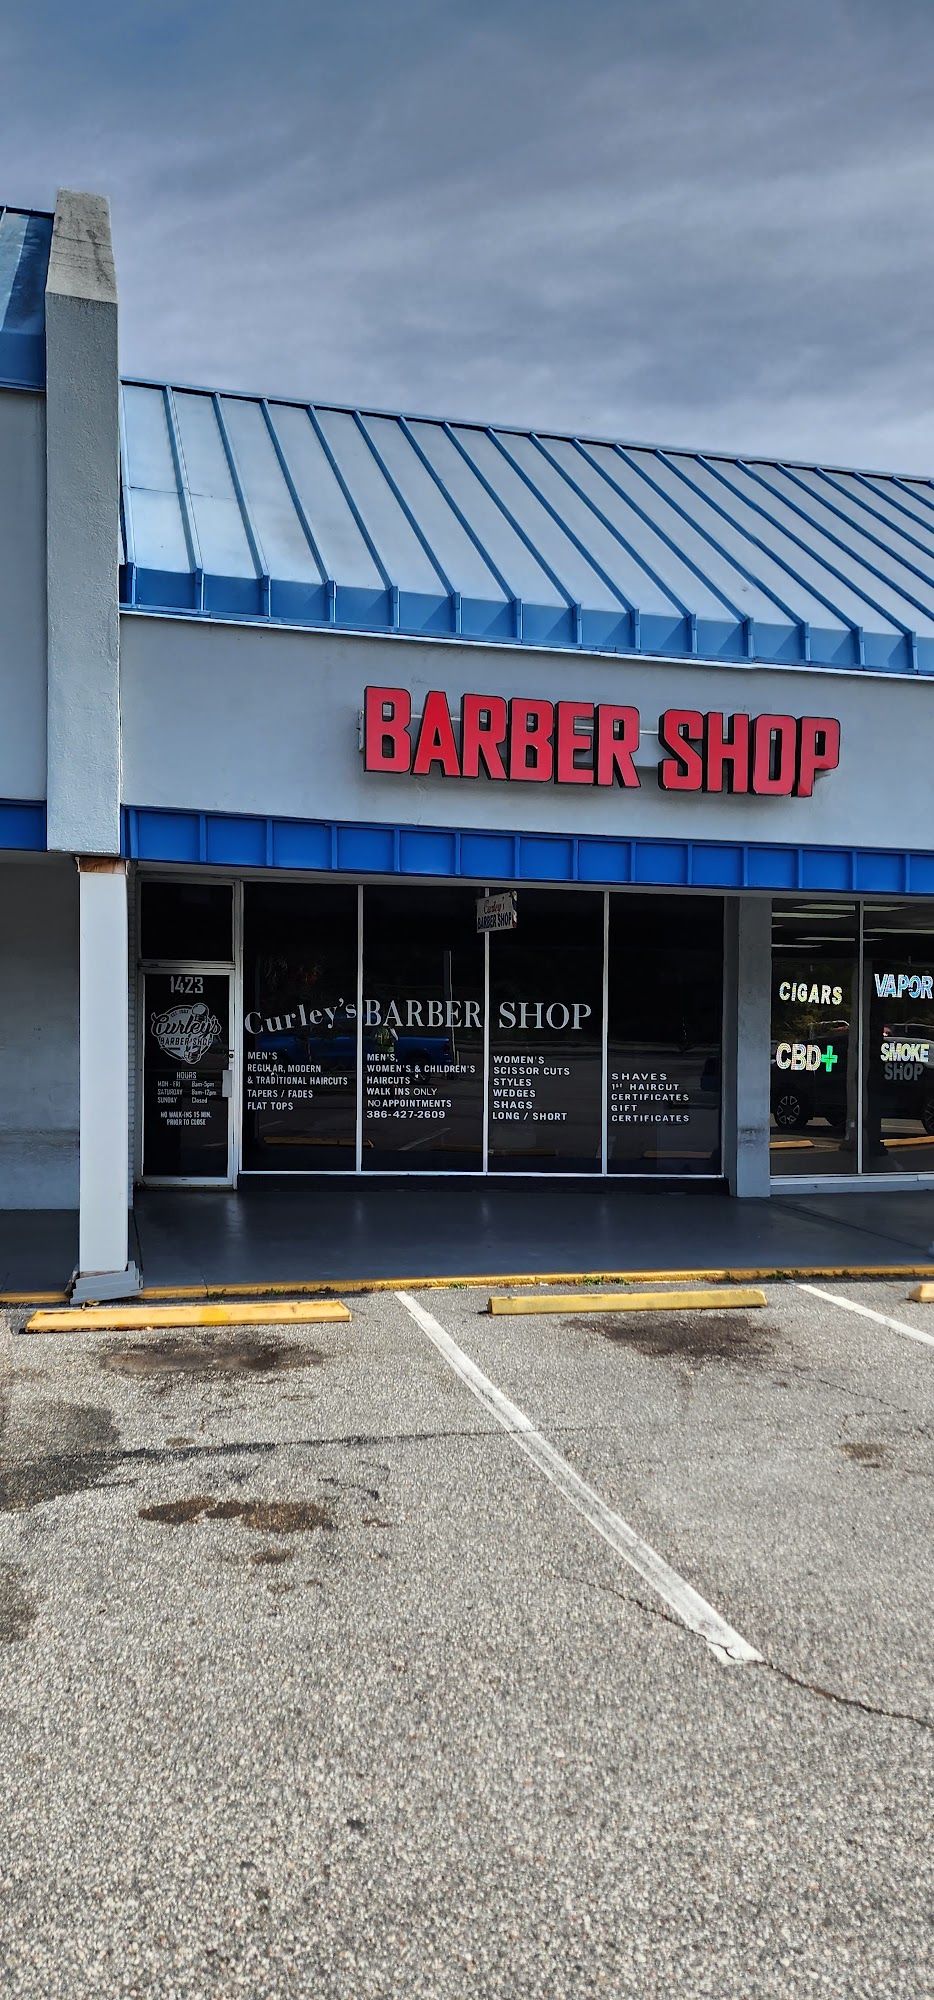 Curley’s Barber Shop